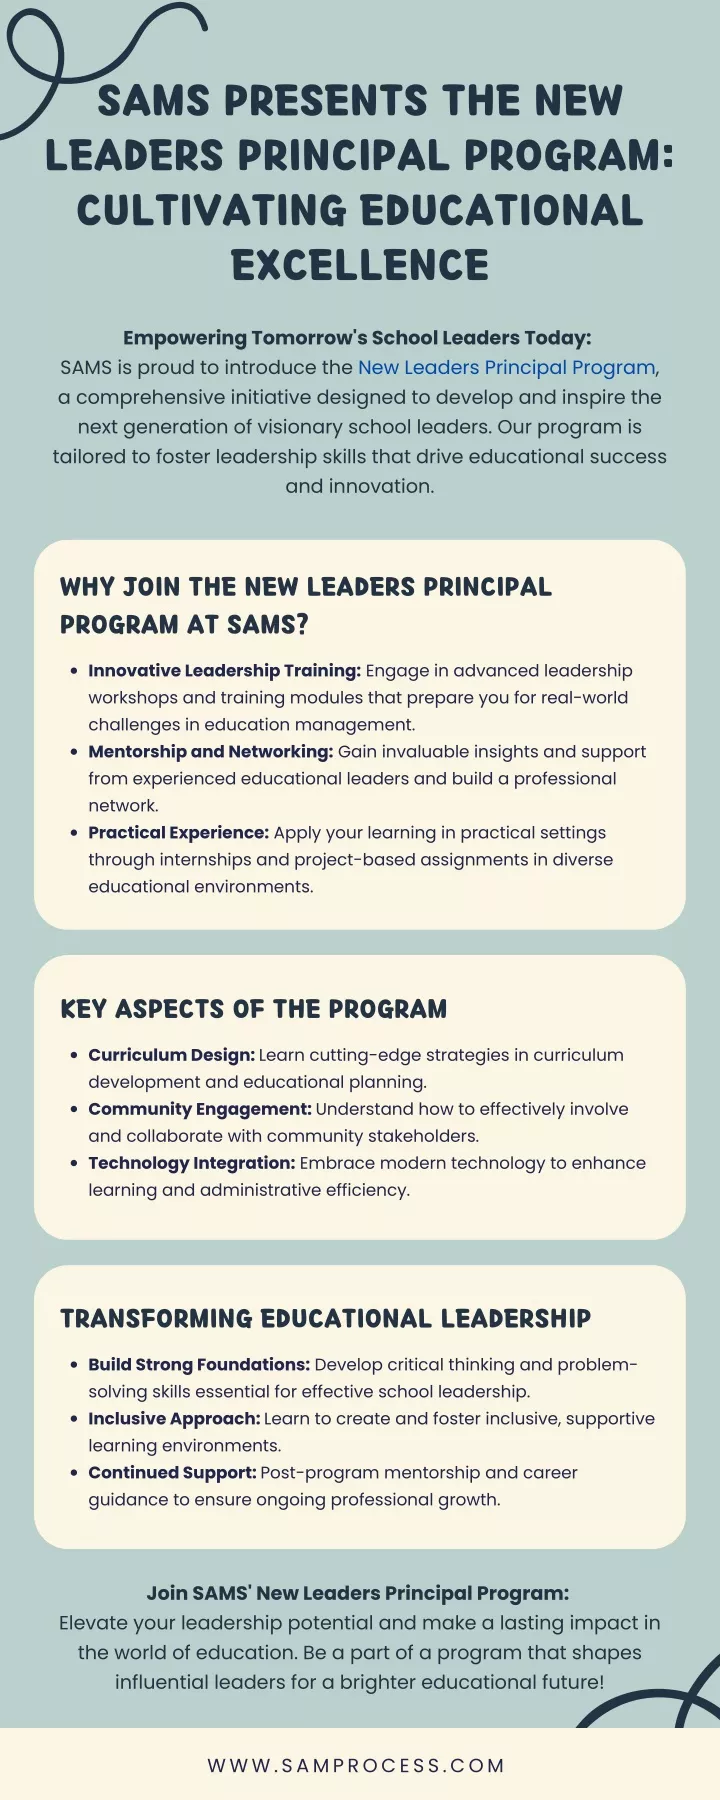 sams presents the new leaders principal program